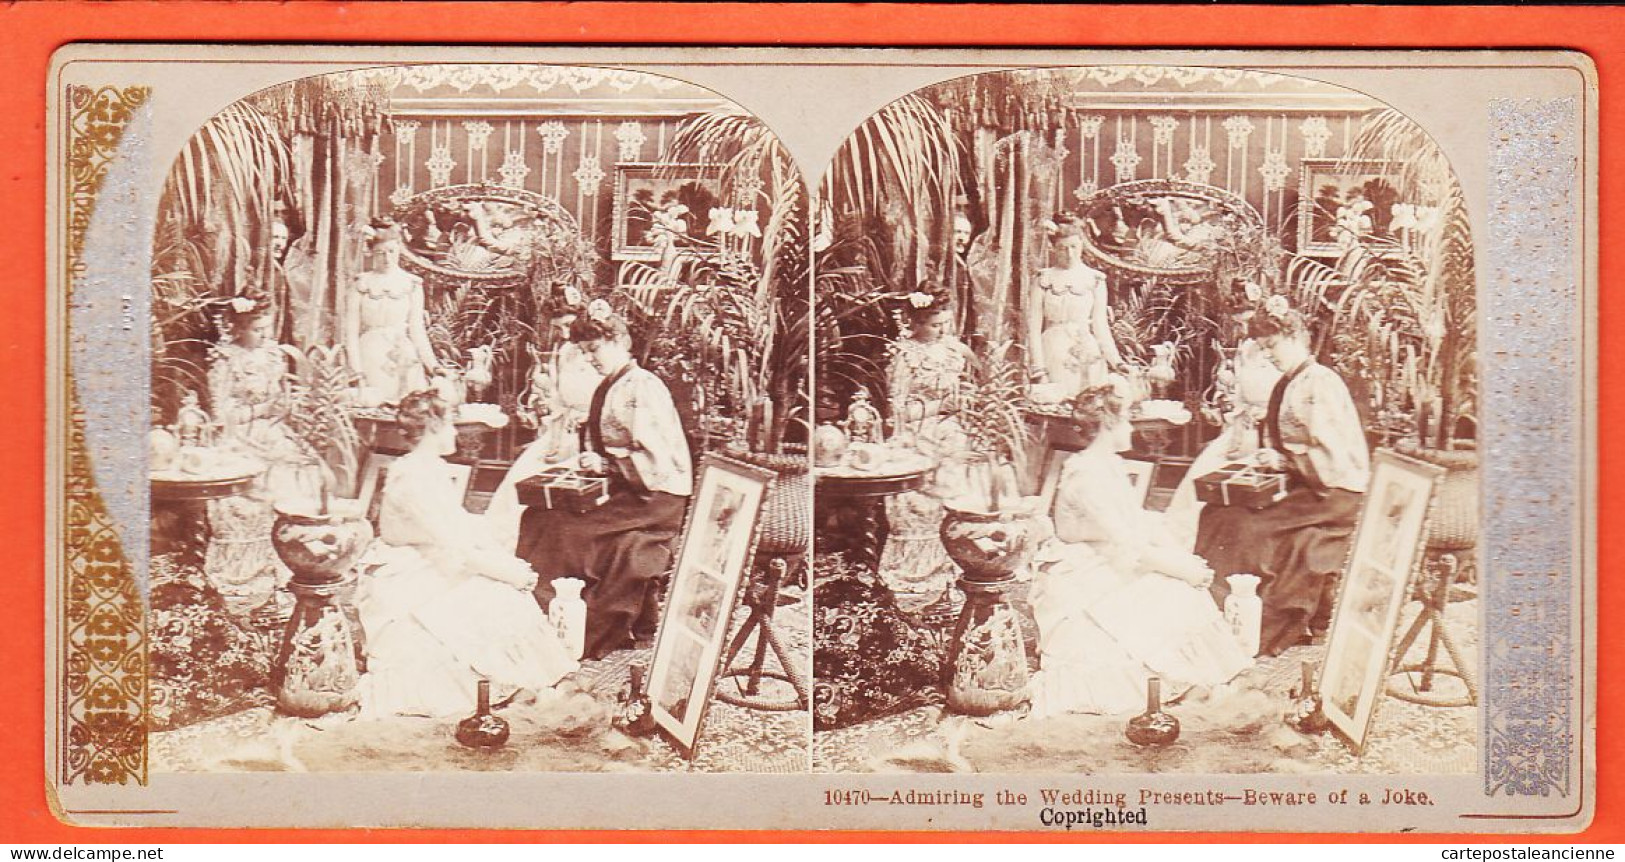 04569 / Admiring The Wedding Presents Beware Of A Joke 1- Mefiez Vous Cadeaux Mariage Blague 1890s Stereo-Views  N°10470 - Stereoscopio